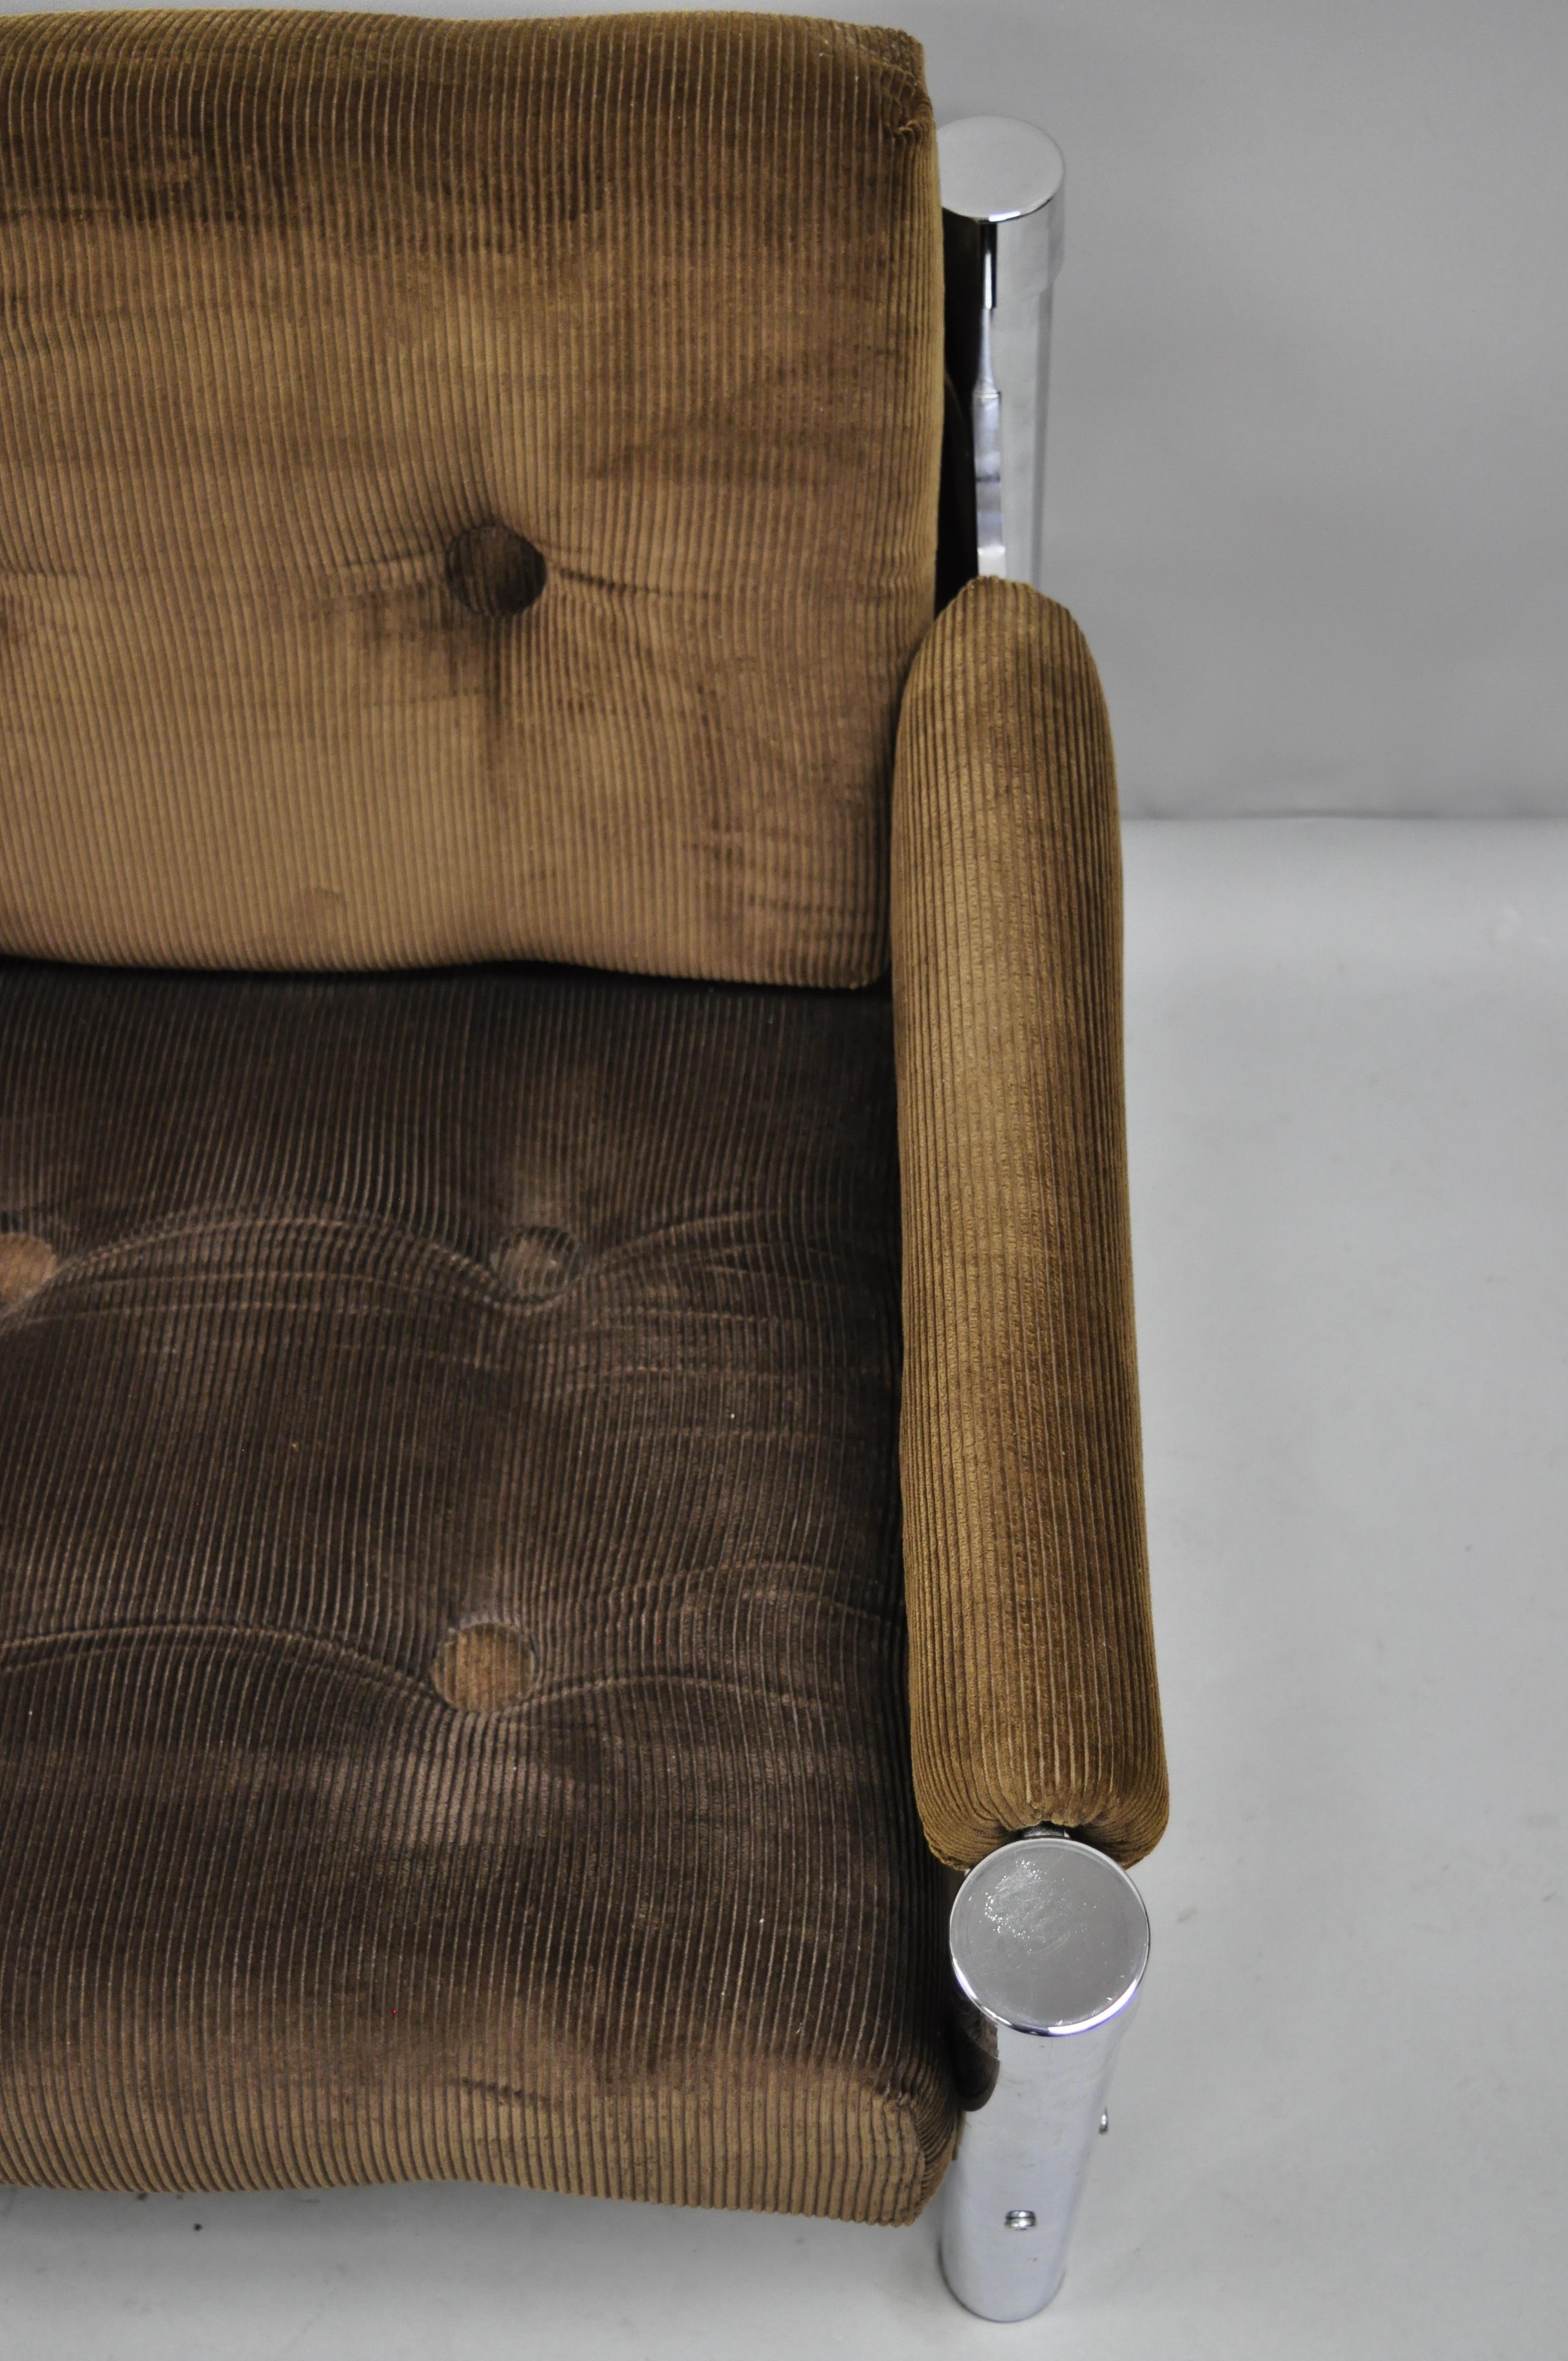 American Mid-Century Modern Chrome and Brown Corduroy Loveseat Sofa by James David Inc